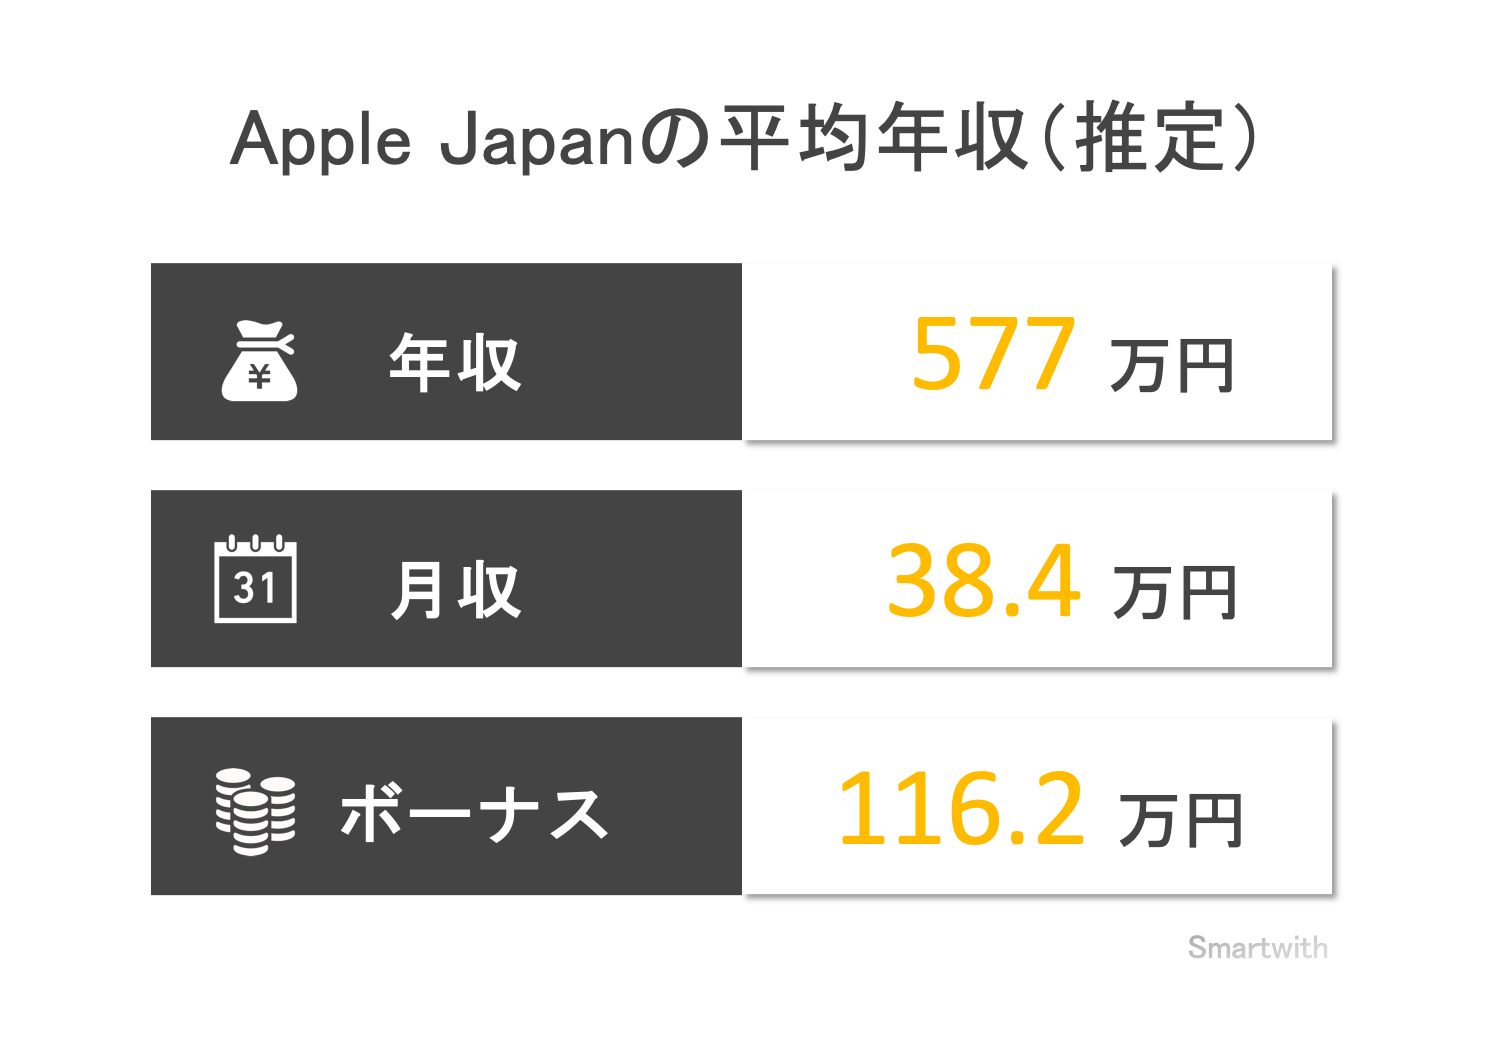 Apple Japan アップルジャパン の平均年収はいくら 社長の年収も解説 キャリトク